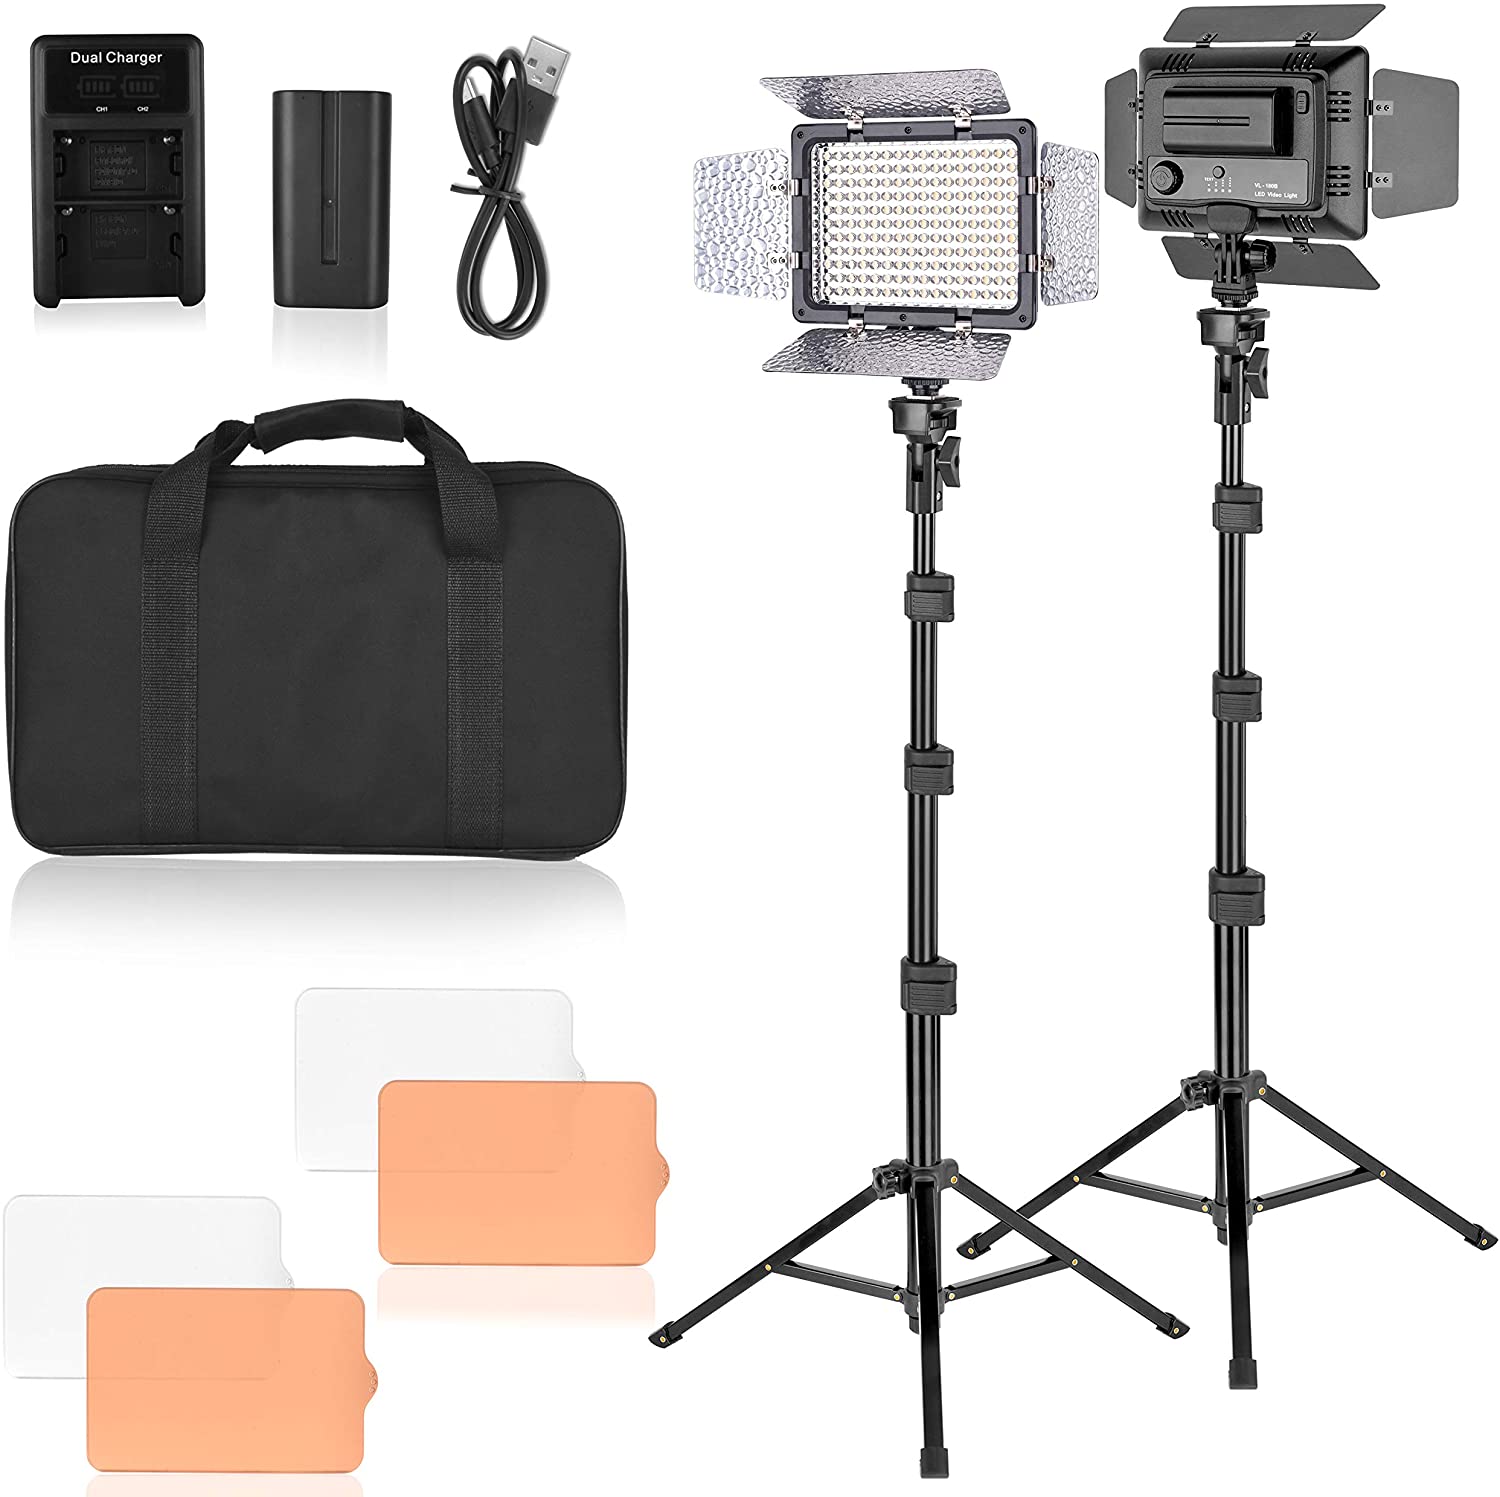 Best portrait lighting kits for flattering people – Photography Equipment